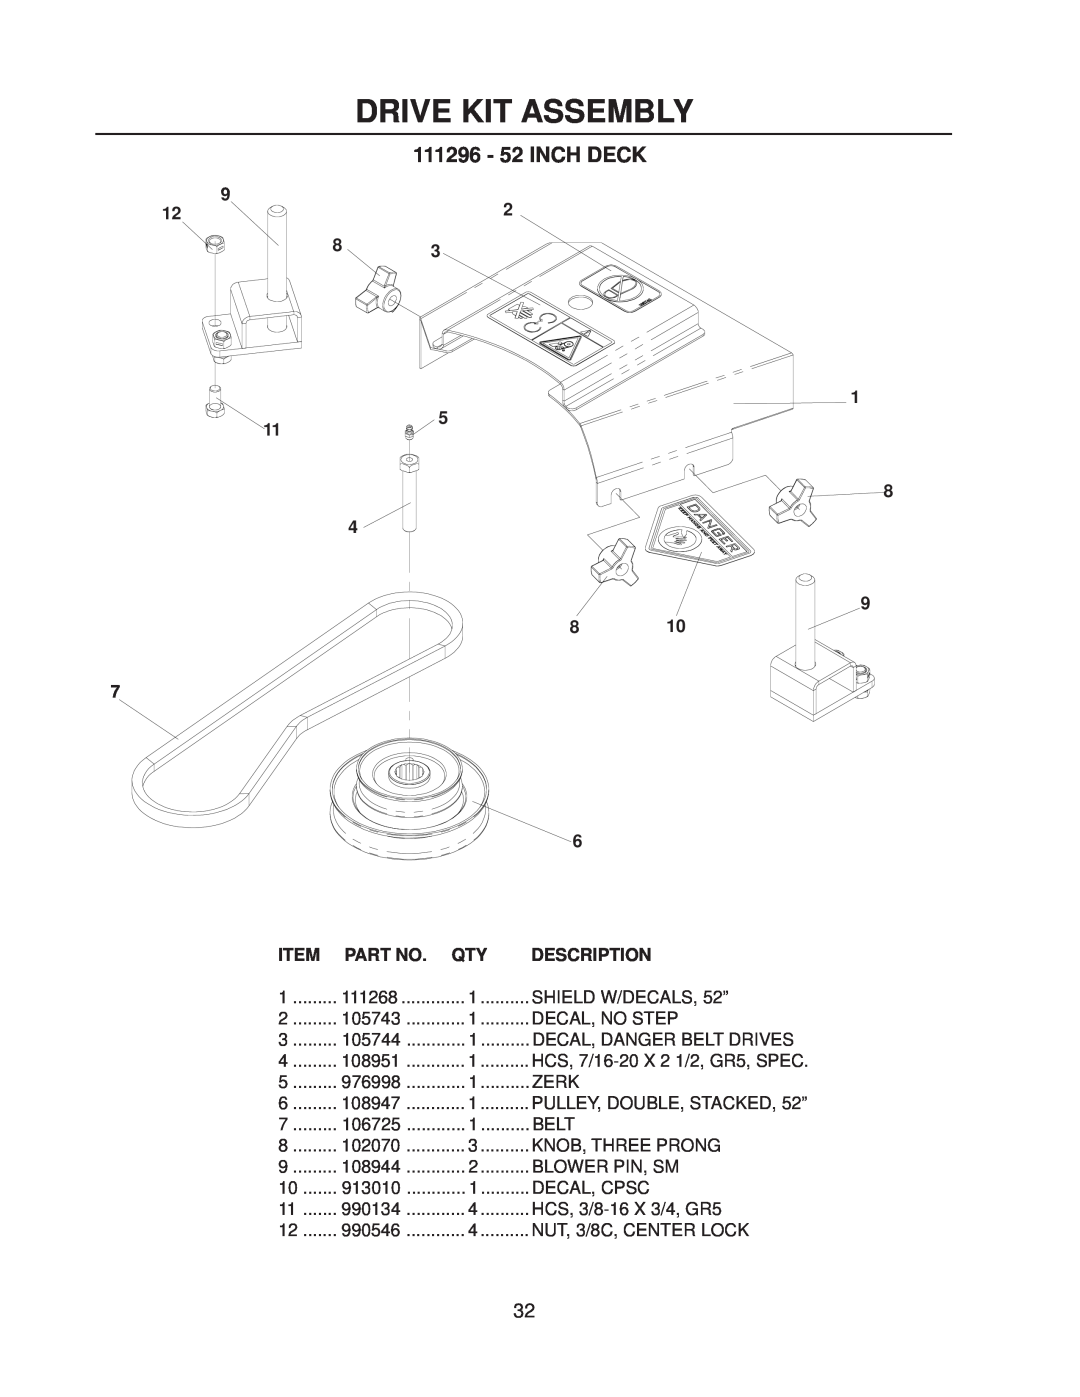 Yazoo/Kees CS9, CS13 manual 111296 - 52 INCH DECK, Drive Kit Assembly, Description 